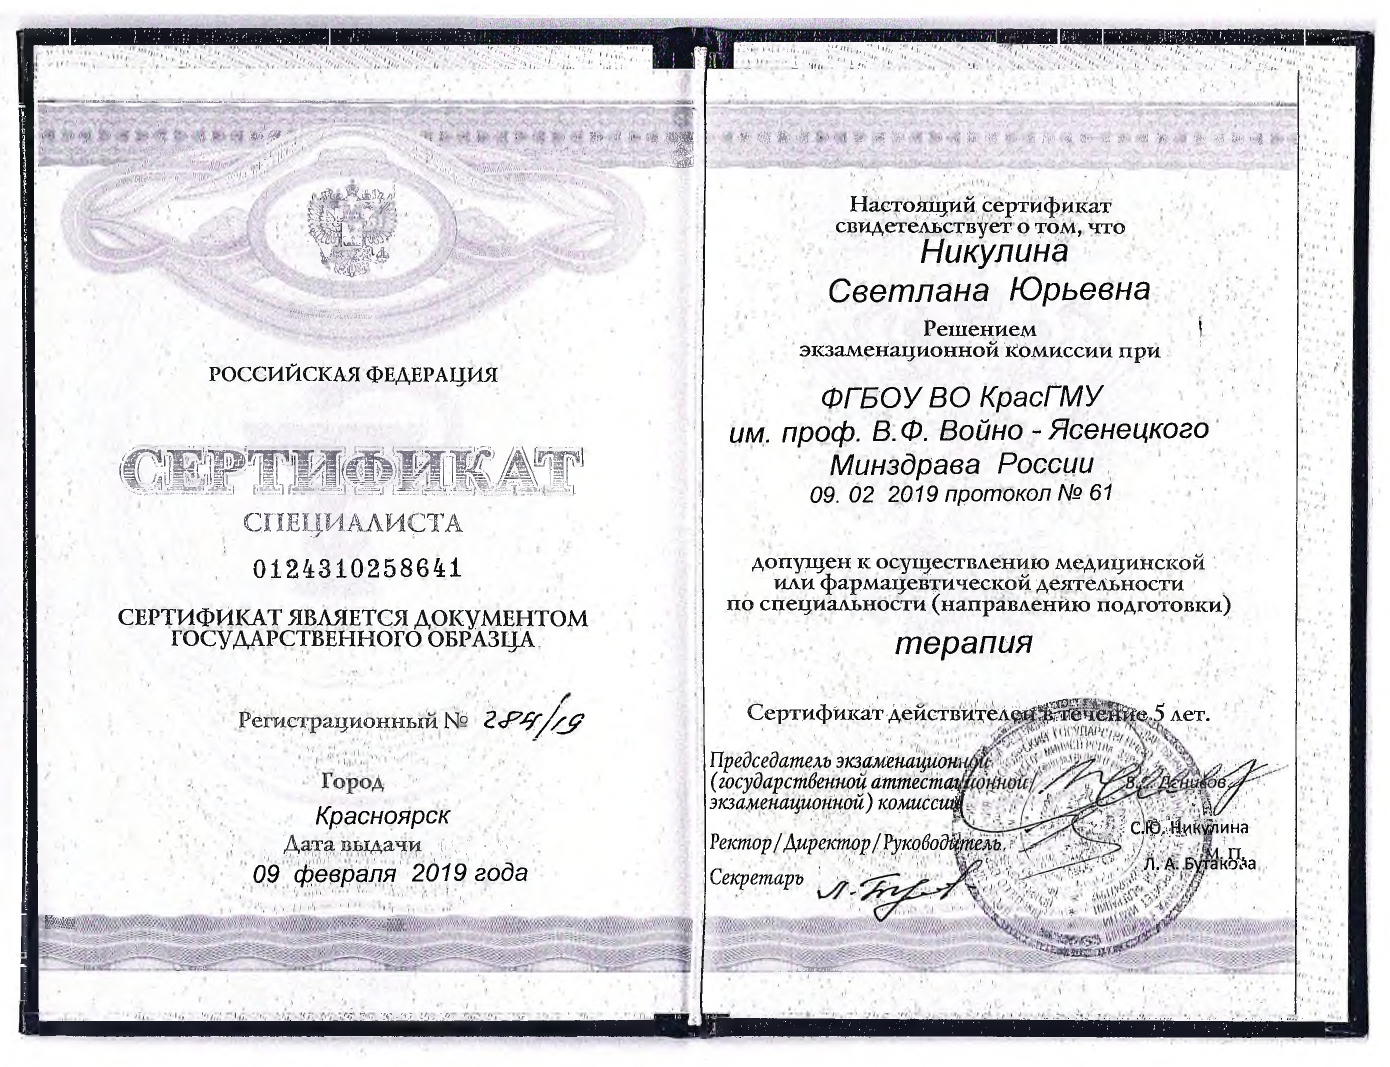 сертификат ТЕРАПИЯ_page-0001.jpg